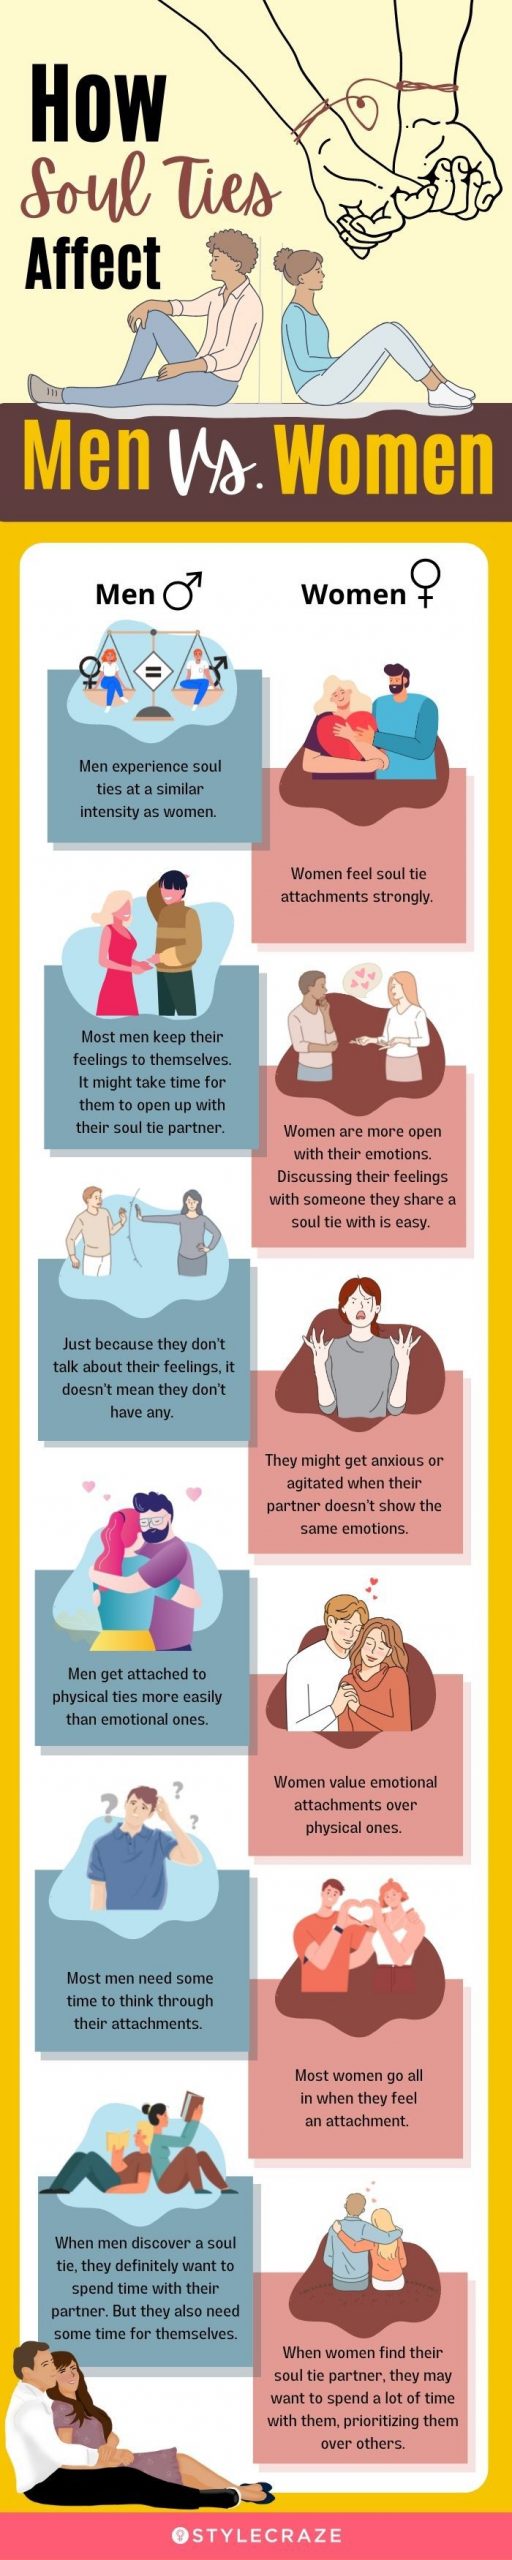 how soul ties affect men vs. women [infographic]